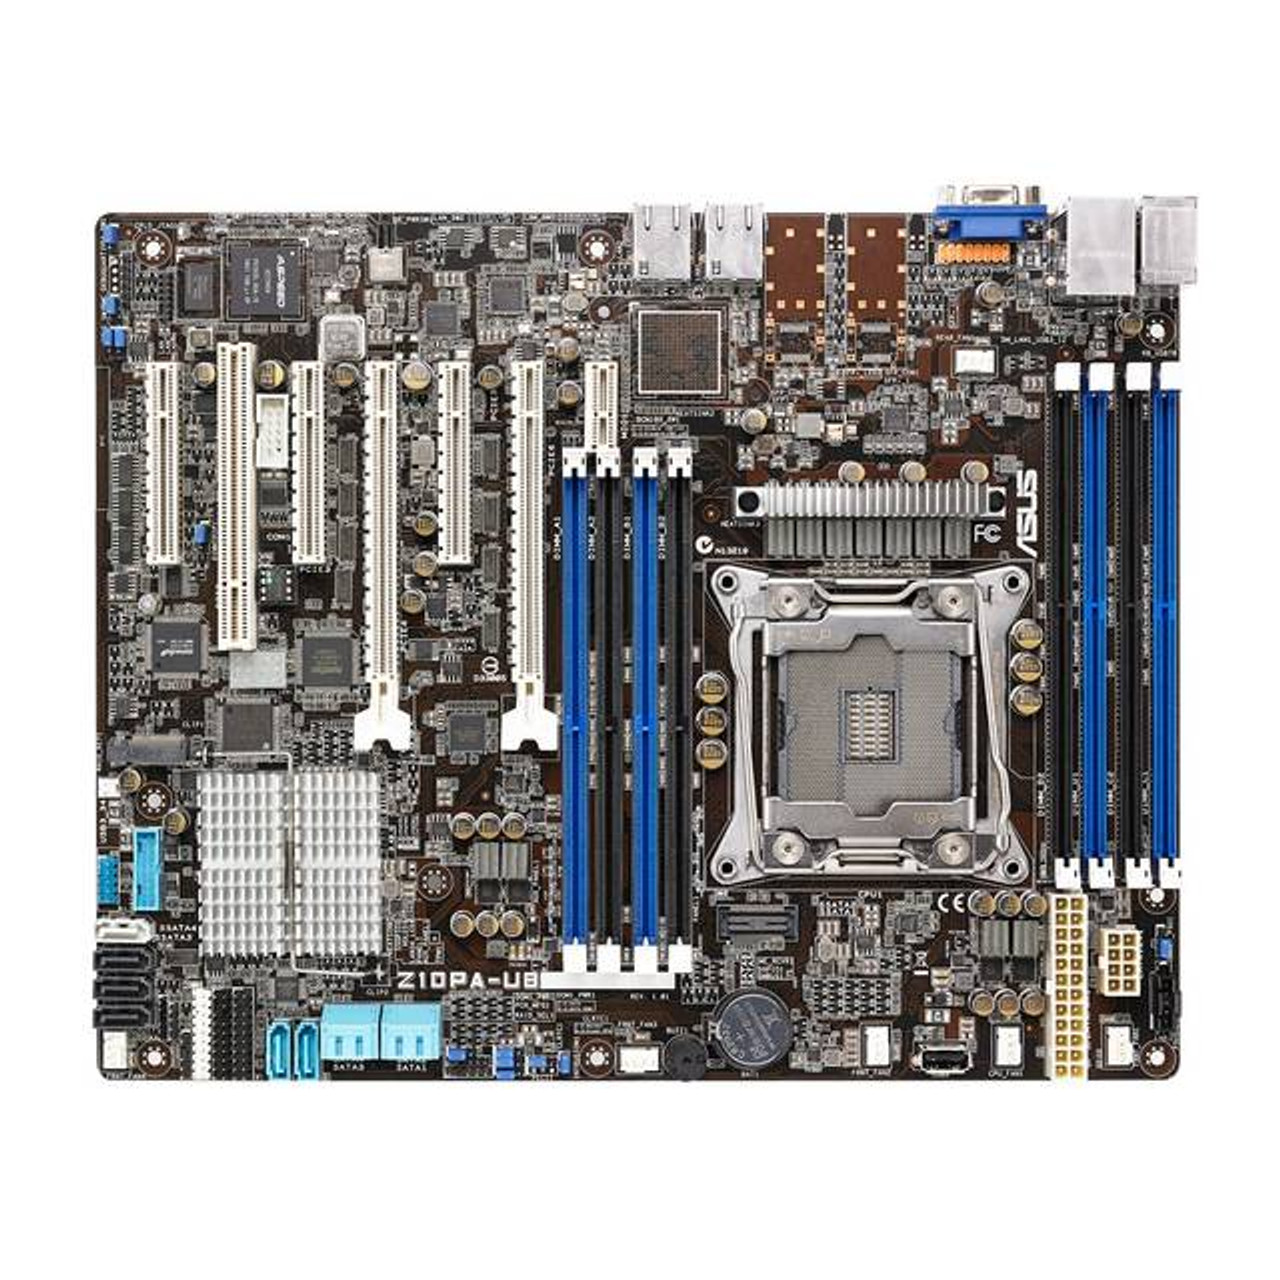 ASUS Z10PA-U8 LGA2011-v3/ Intel C612 PCH/ DDR4/ SATA3&USB3.0/ M.2/ V&2GbE/ ATX Server Motherboard